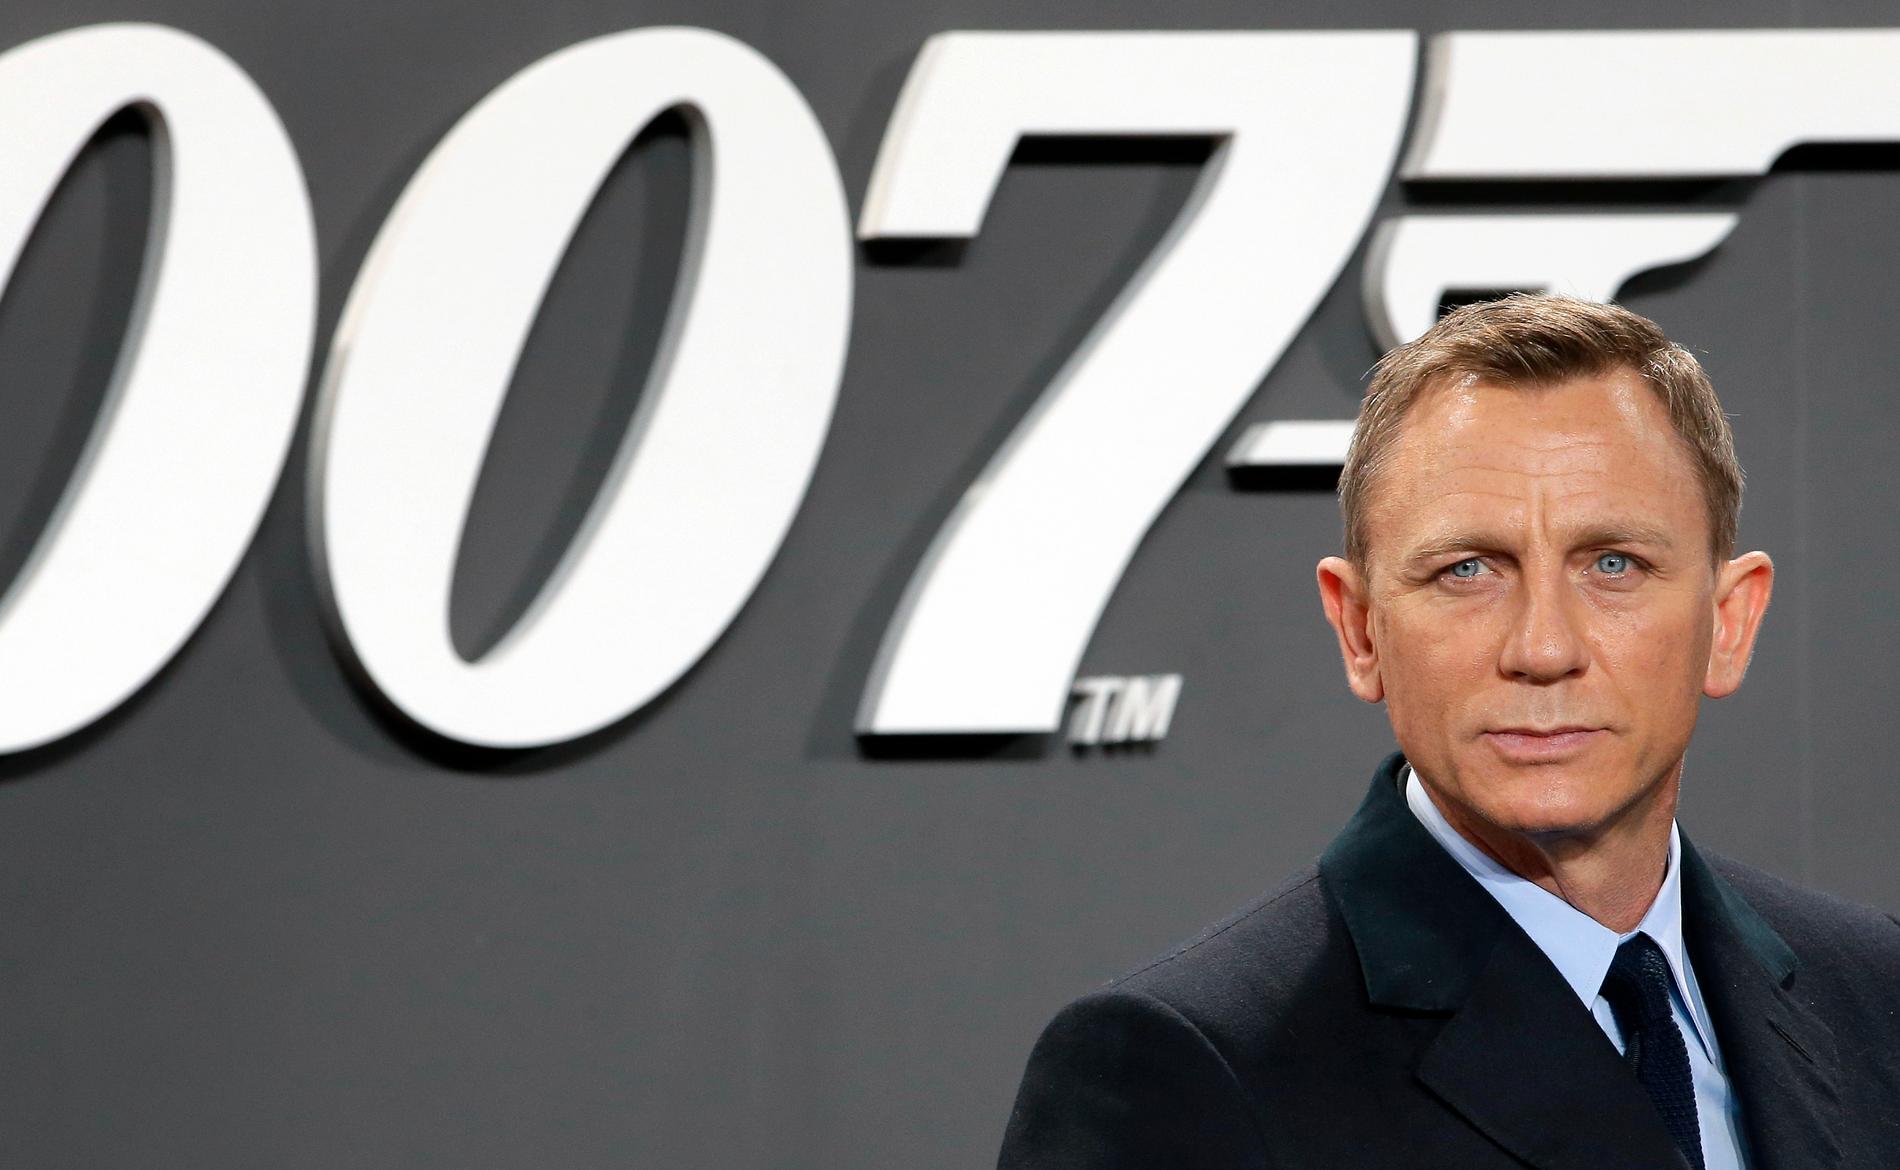 Nya Bondfilmen ”No time to die” med Daniel Craig kan vi eventuellt se i höst.